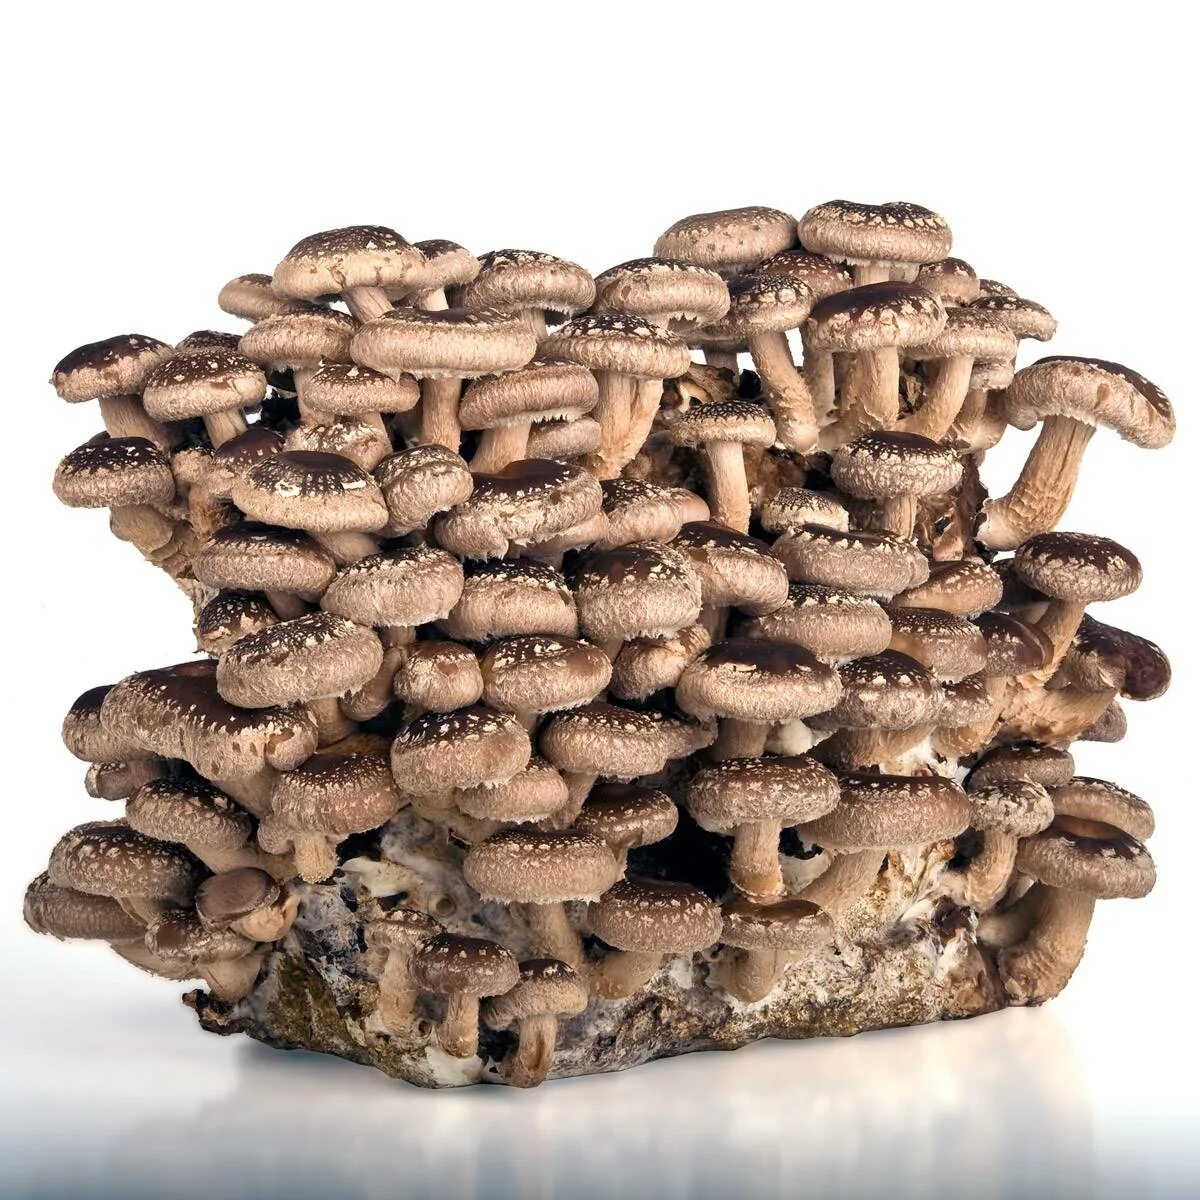 Шиитаке цена. Японские грибы шиитаке. Шиитаке Lentinus edodes. Сиитаке (шиитаке. Китайские грибы шитаки.